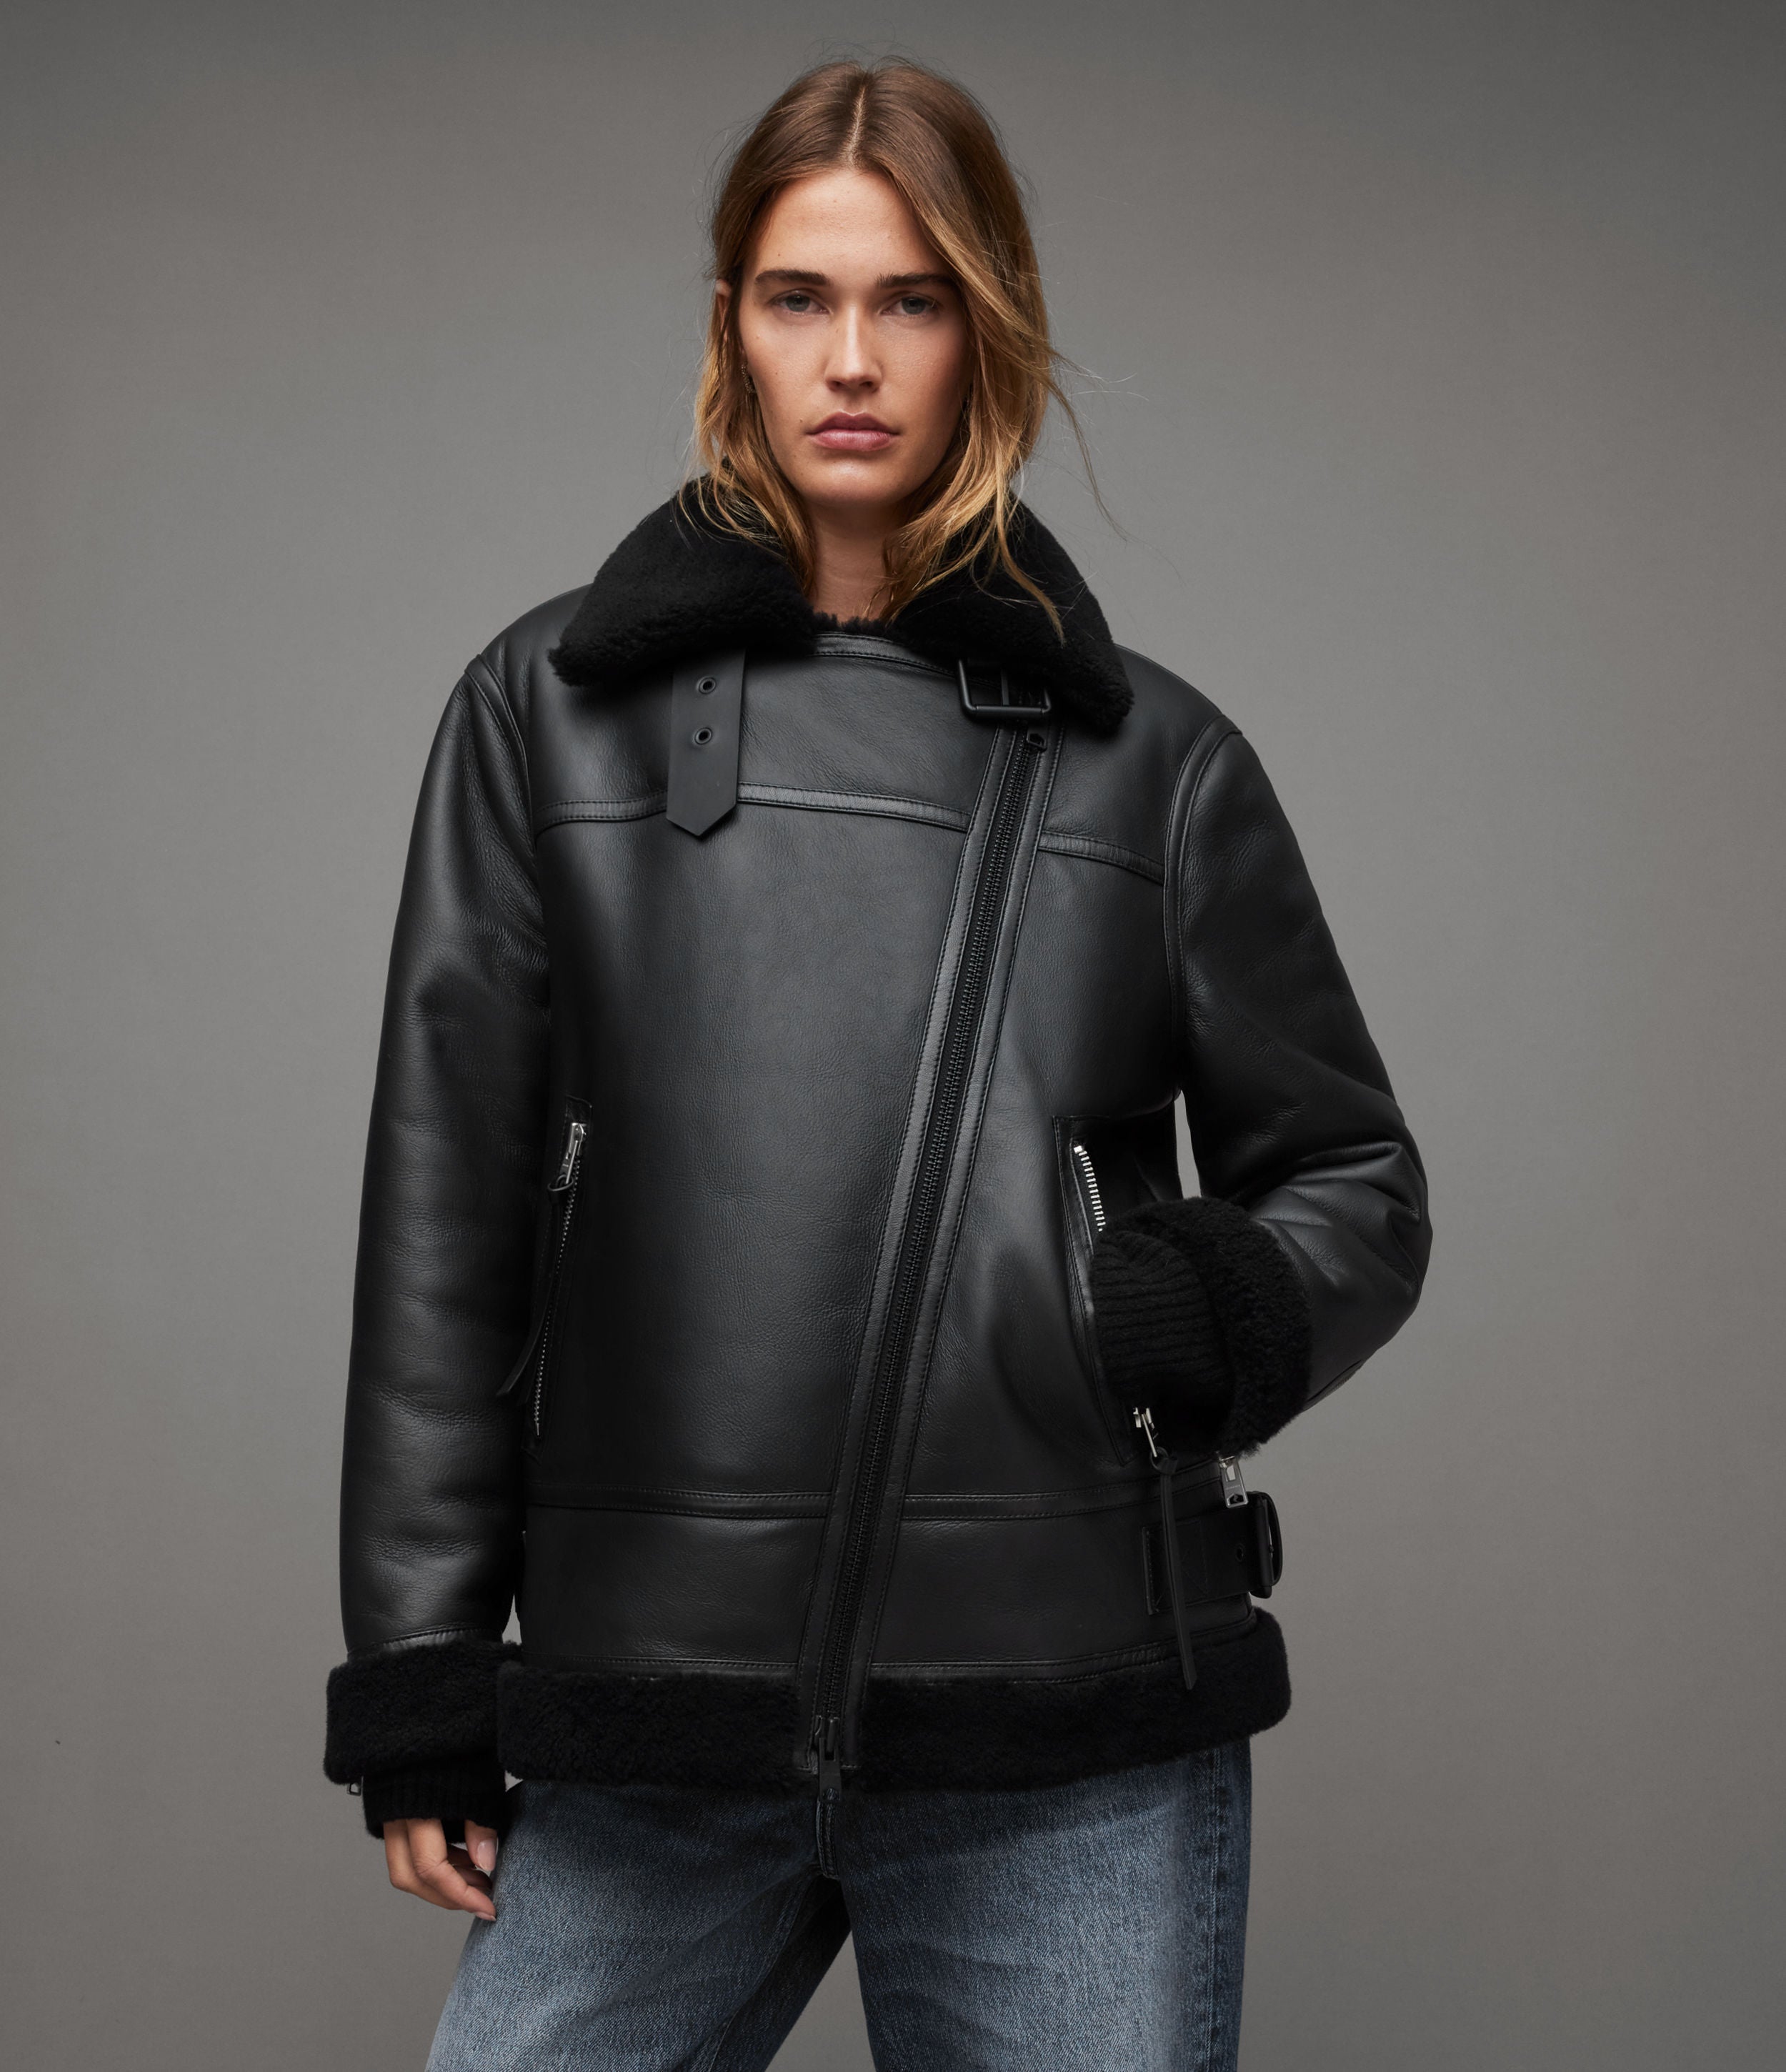 Sola Shearling Leather Jacket